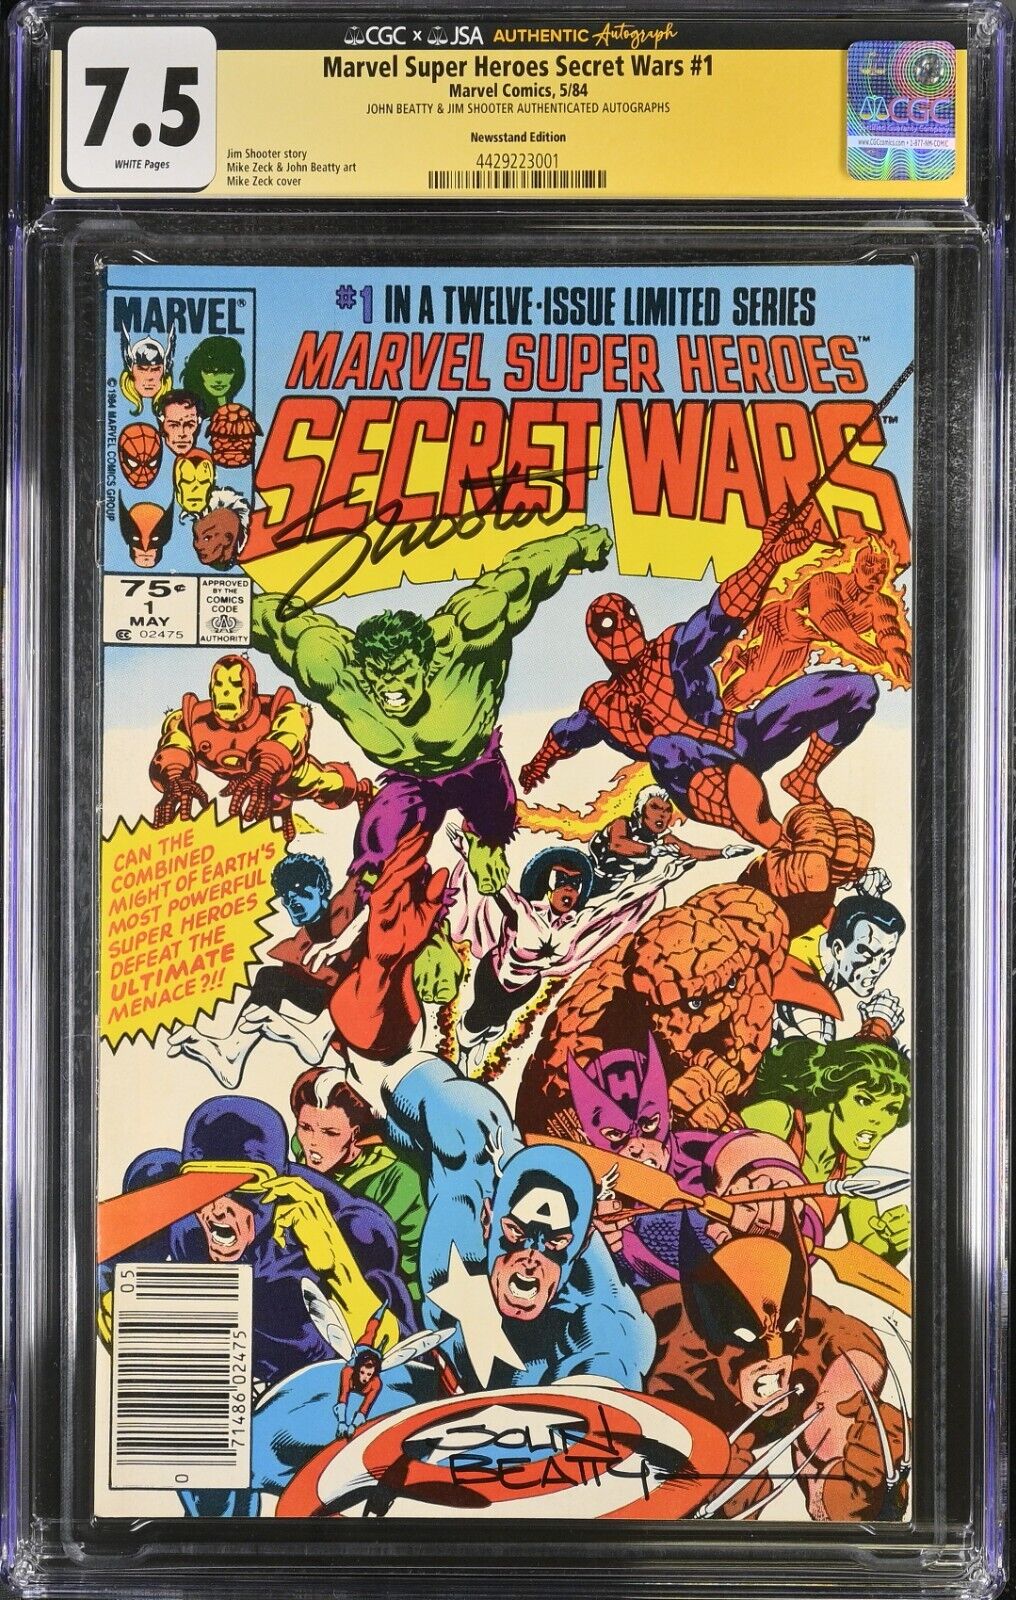 Marvel Super Heroes Secret Wars #1 CGC 7.5 Signed Jim Shooter & Beatty Newsstand